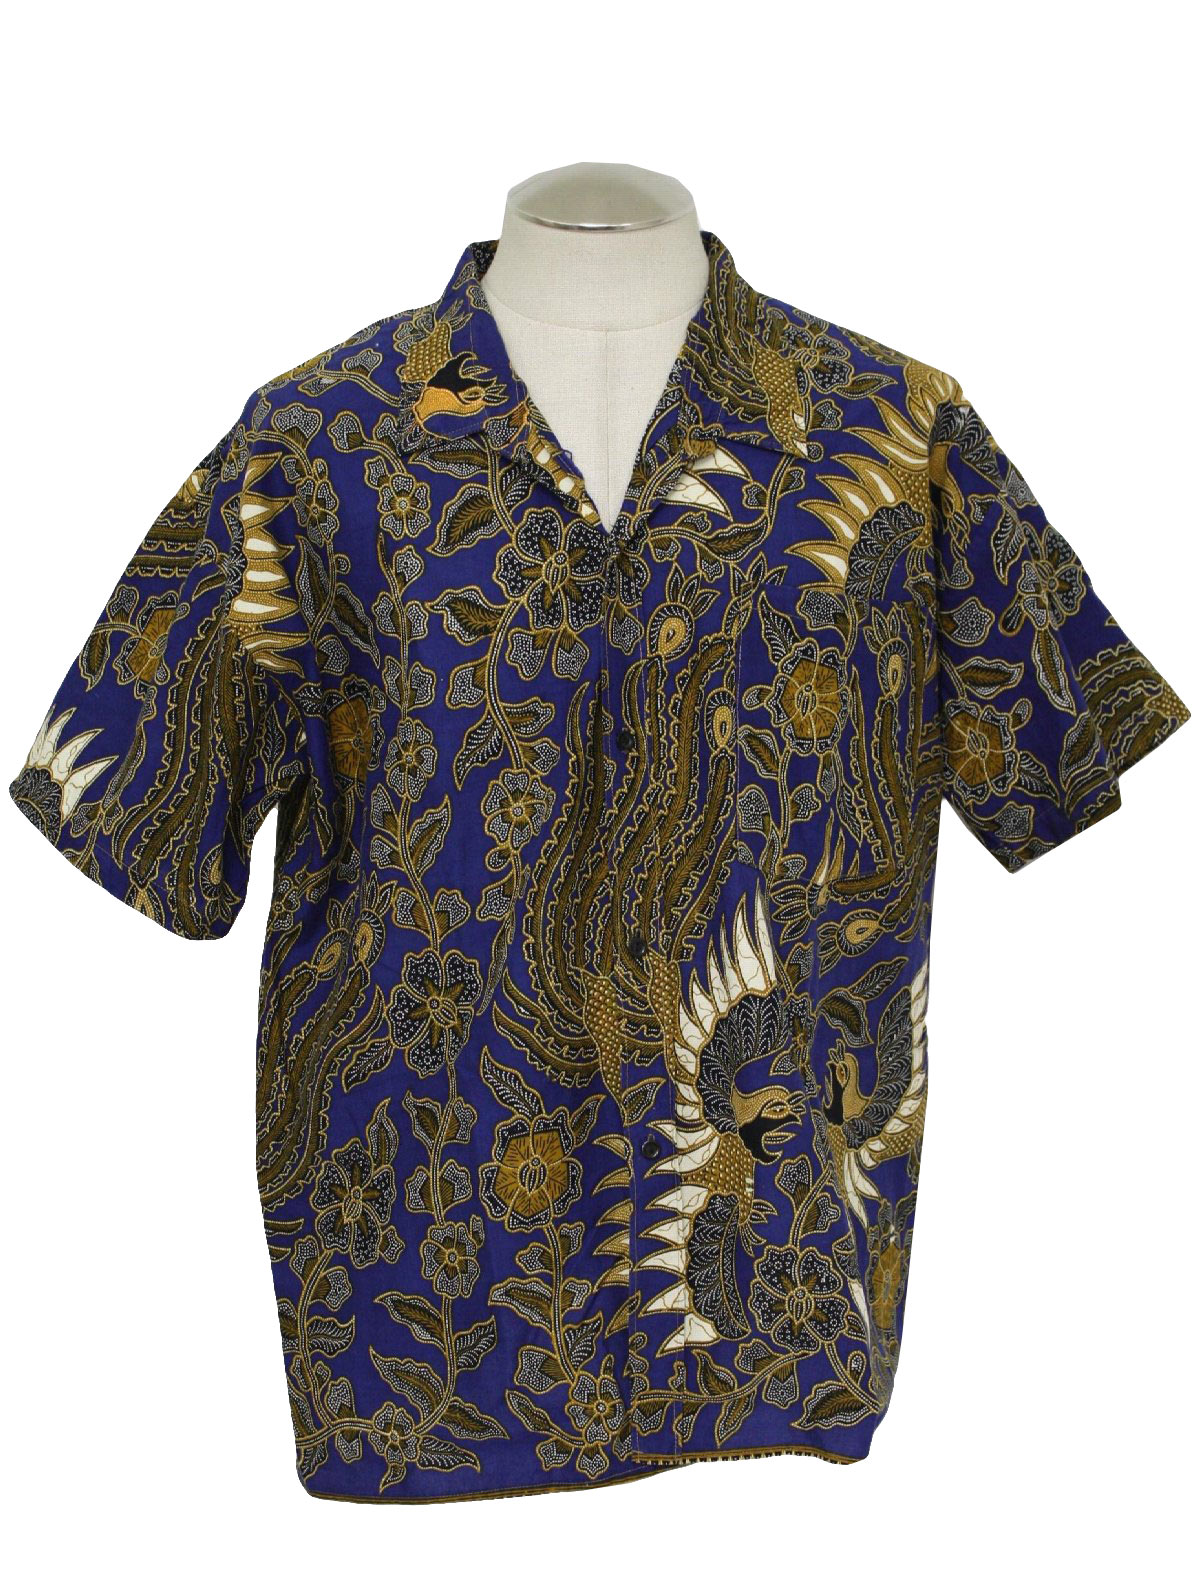 Retro Eighties Hippie Shirt: 80s -Made In Indonesia- Mens blue, white ...